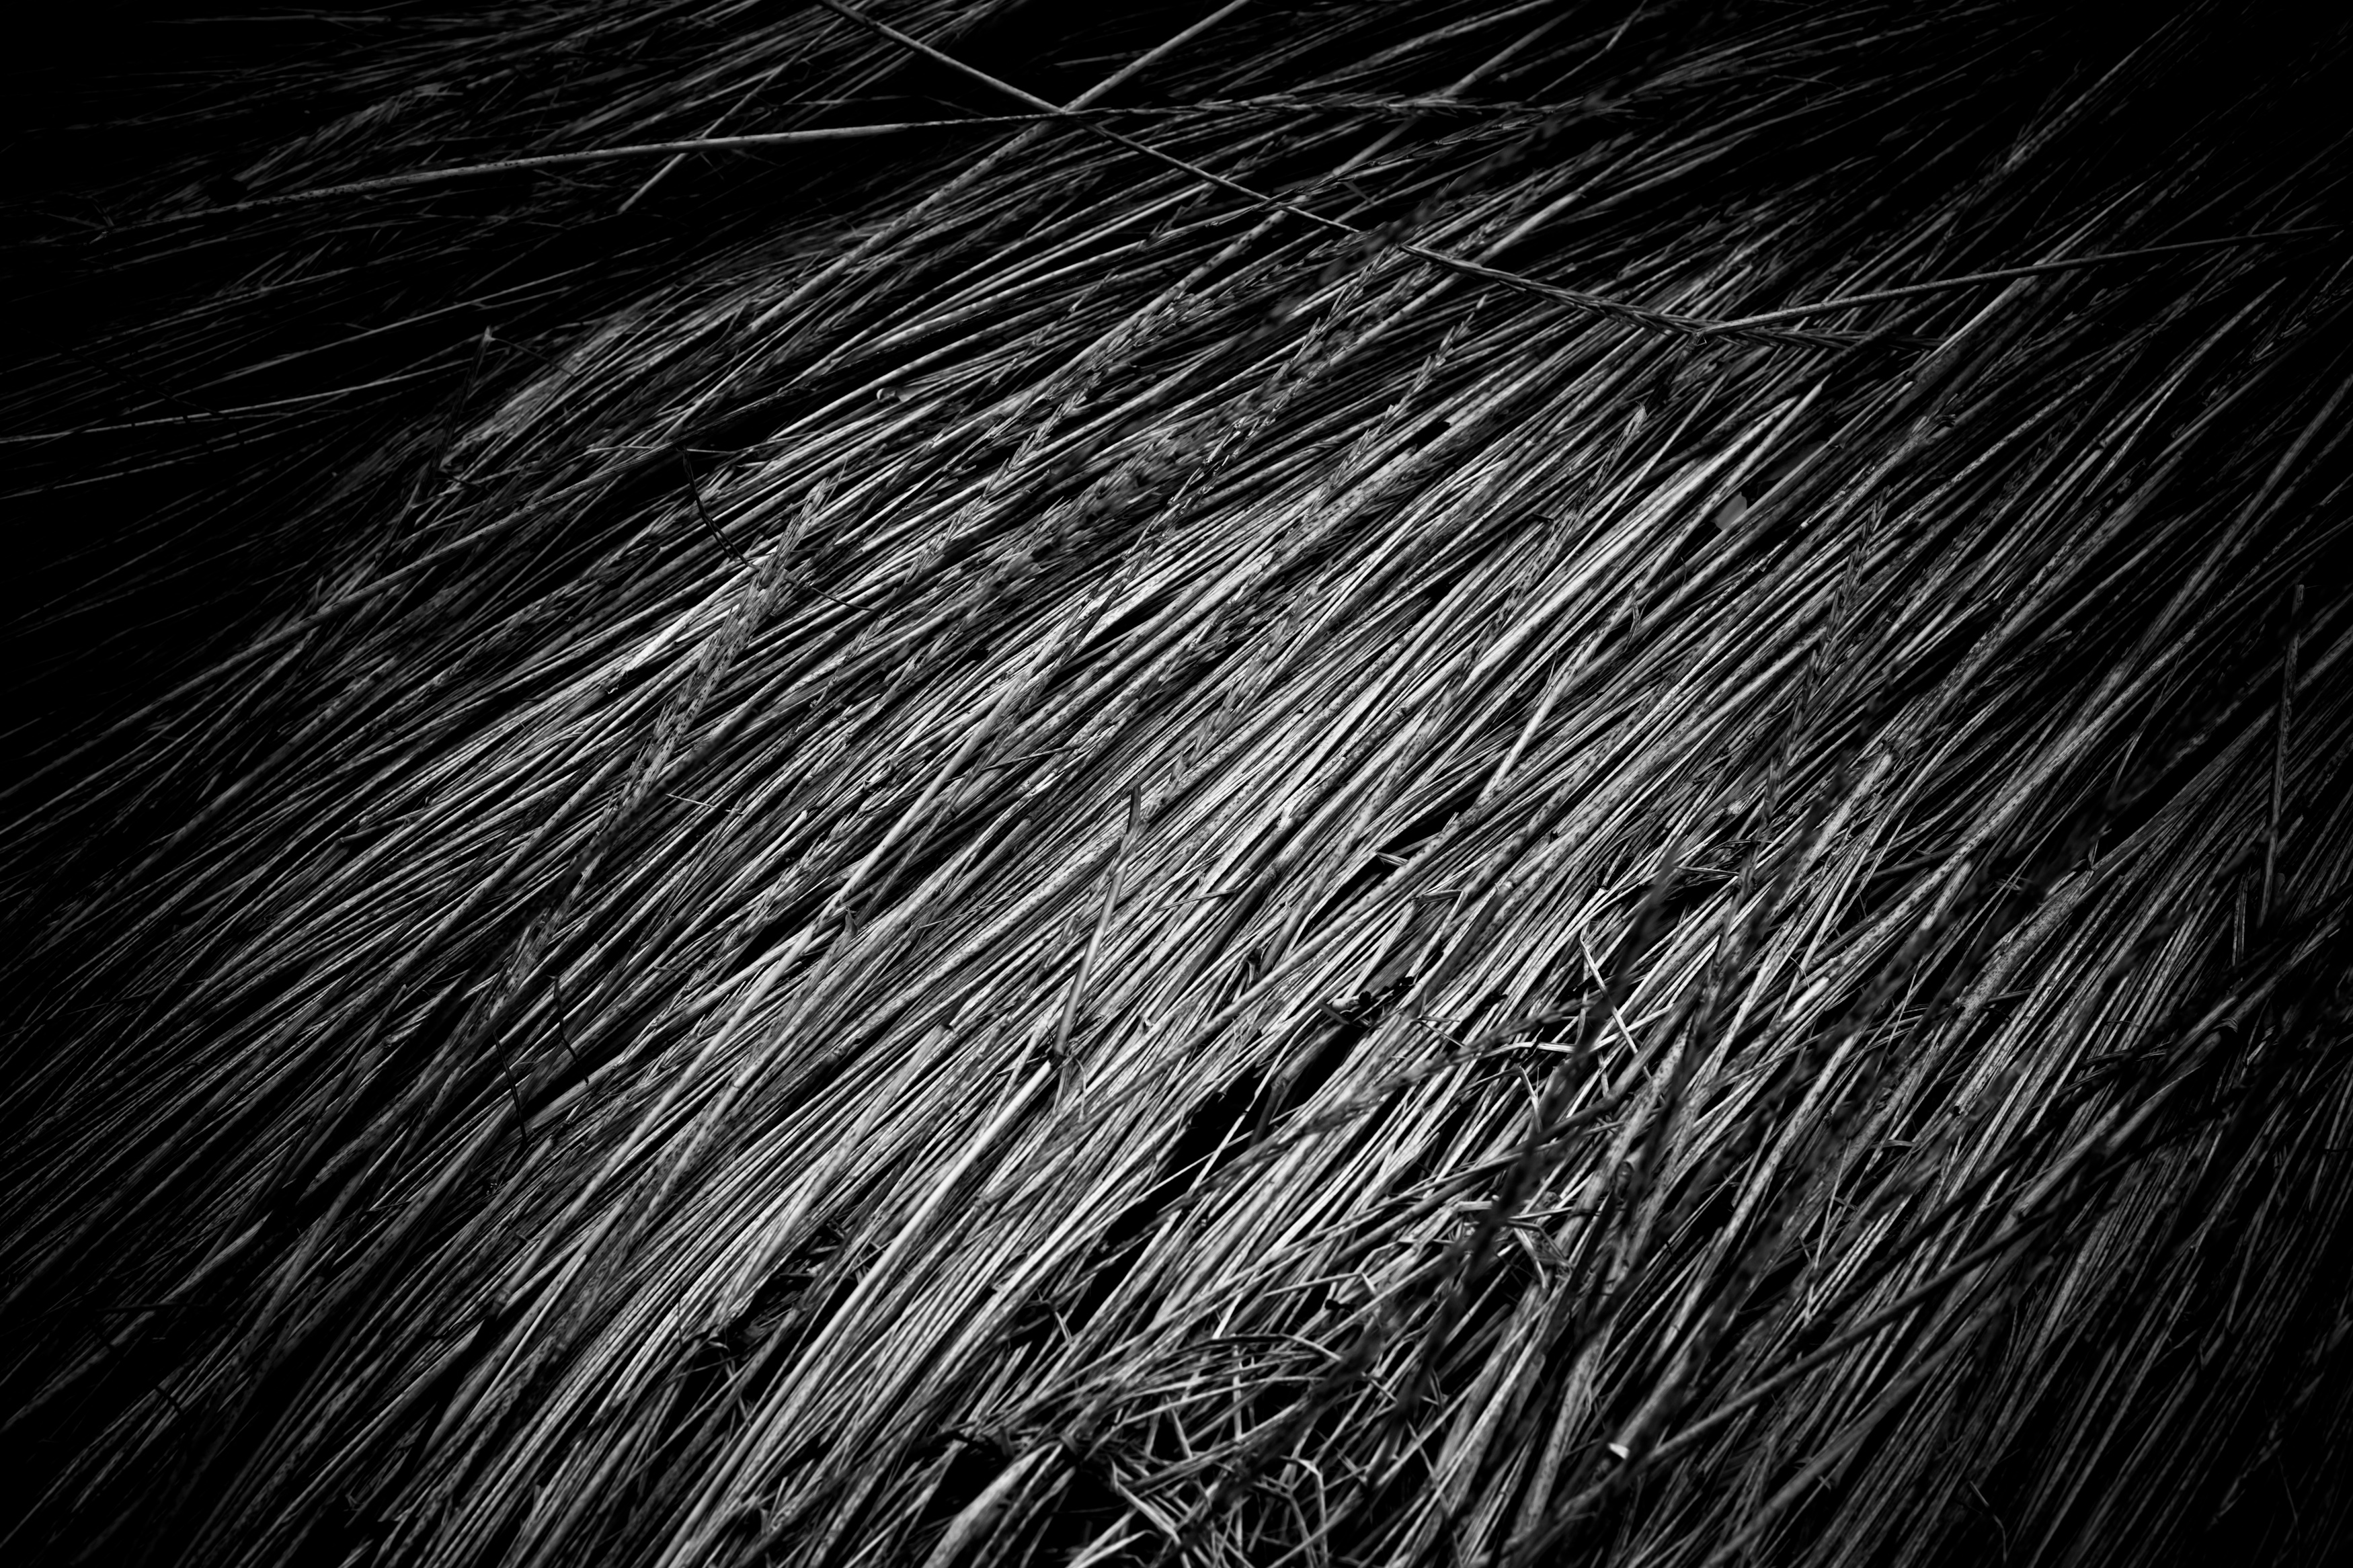 Fallen Straws Texture, Abstract, Black, Fallen, Freetexturefrida, HQ Photo